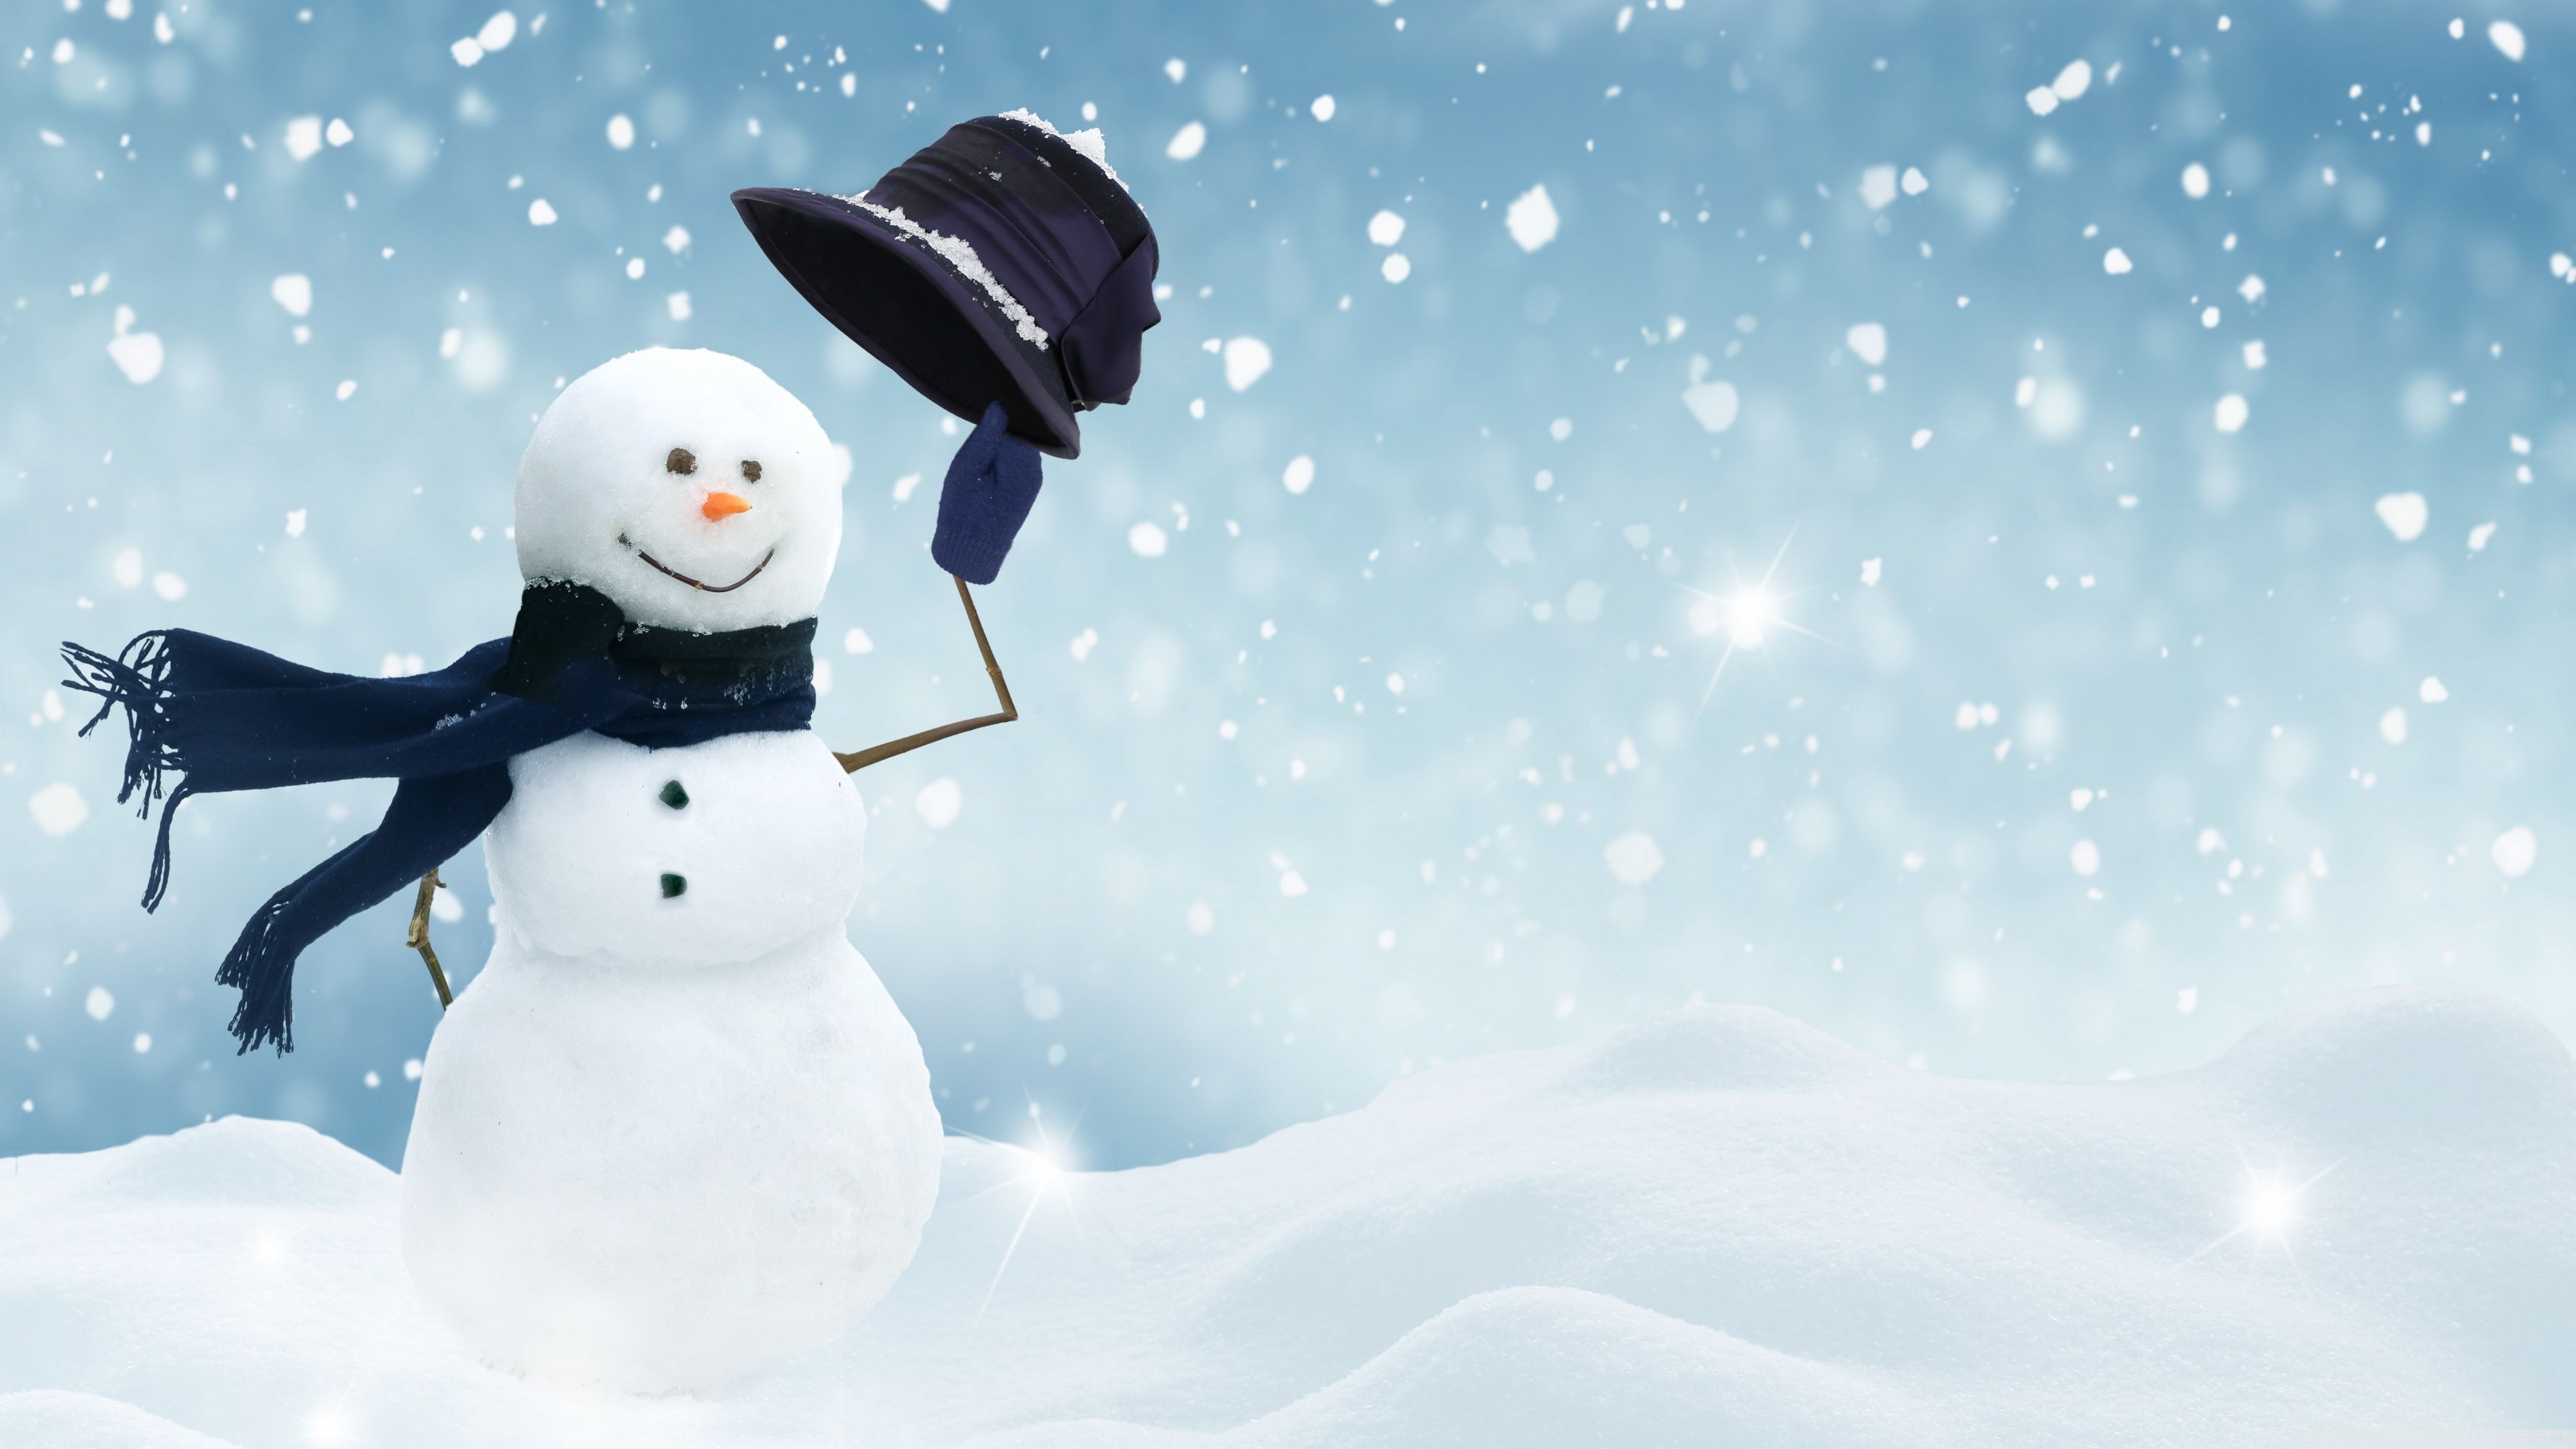 Christmas Snowman Craft Ultra HD Desktop Background Wallpaper for 4K UHD TV, Tablet